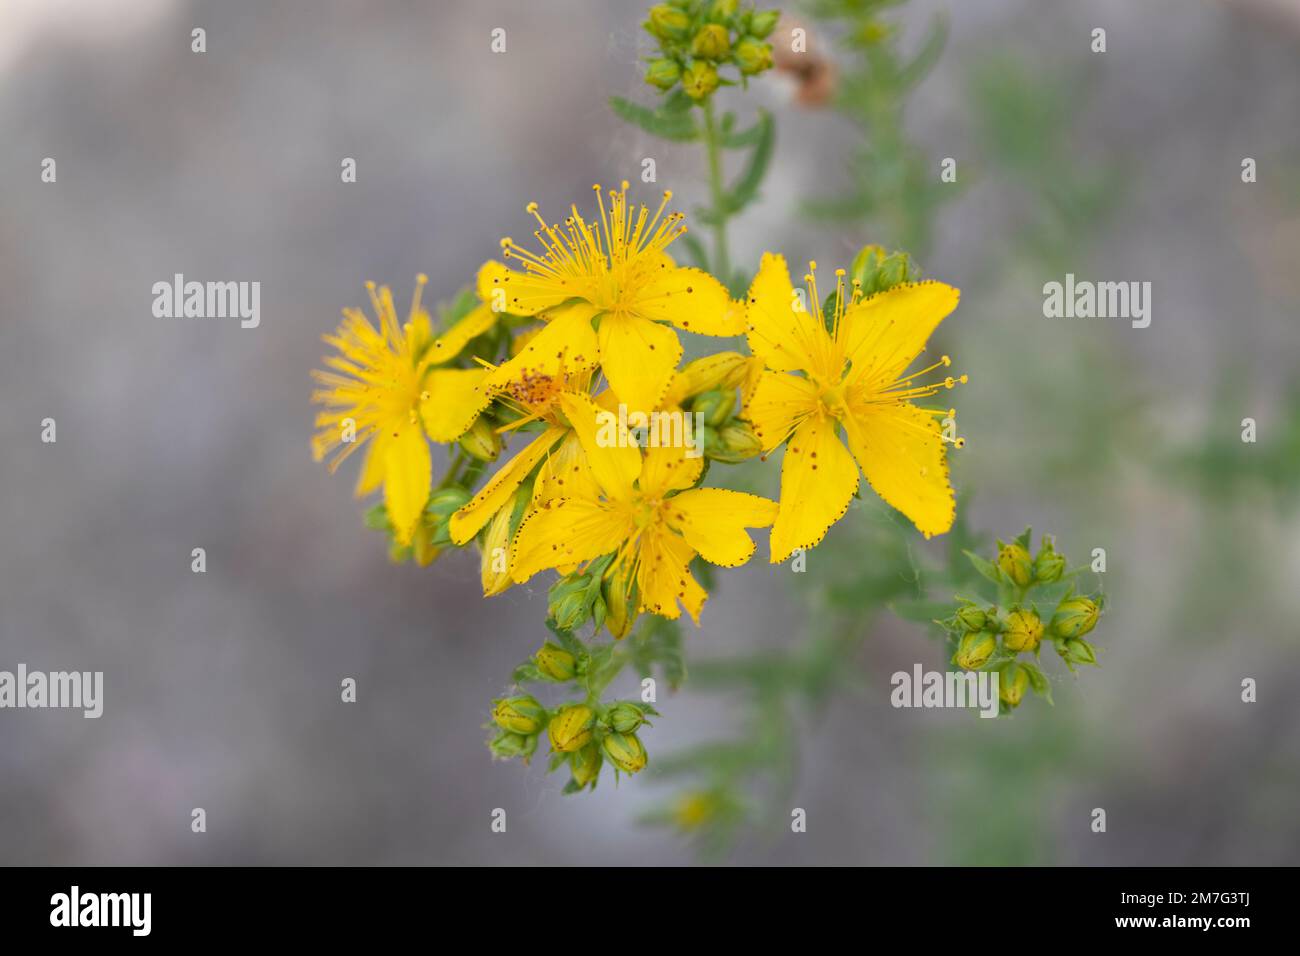 Hypericum flower and plant Stock Photo